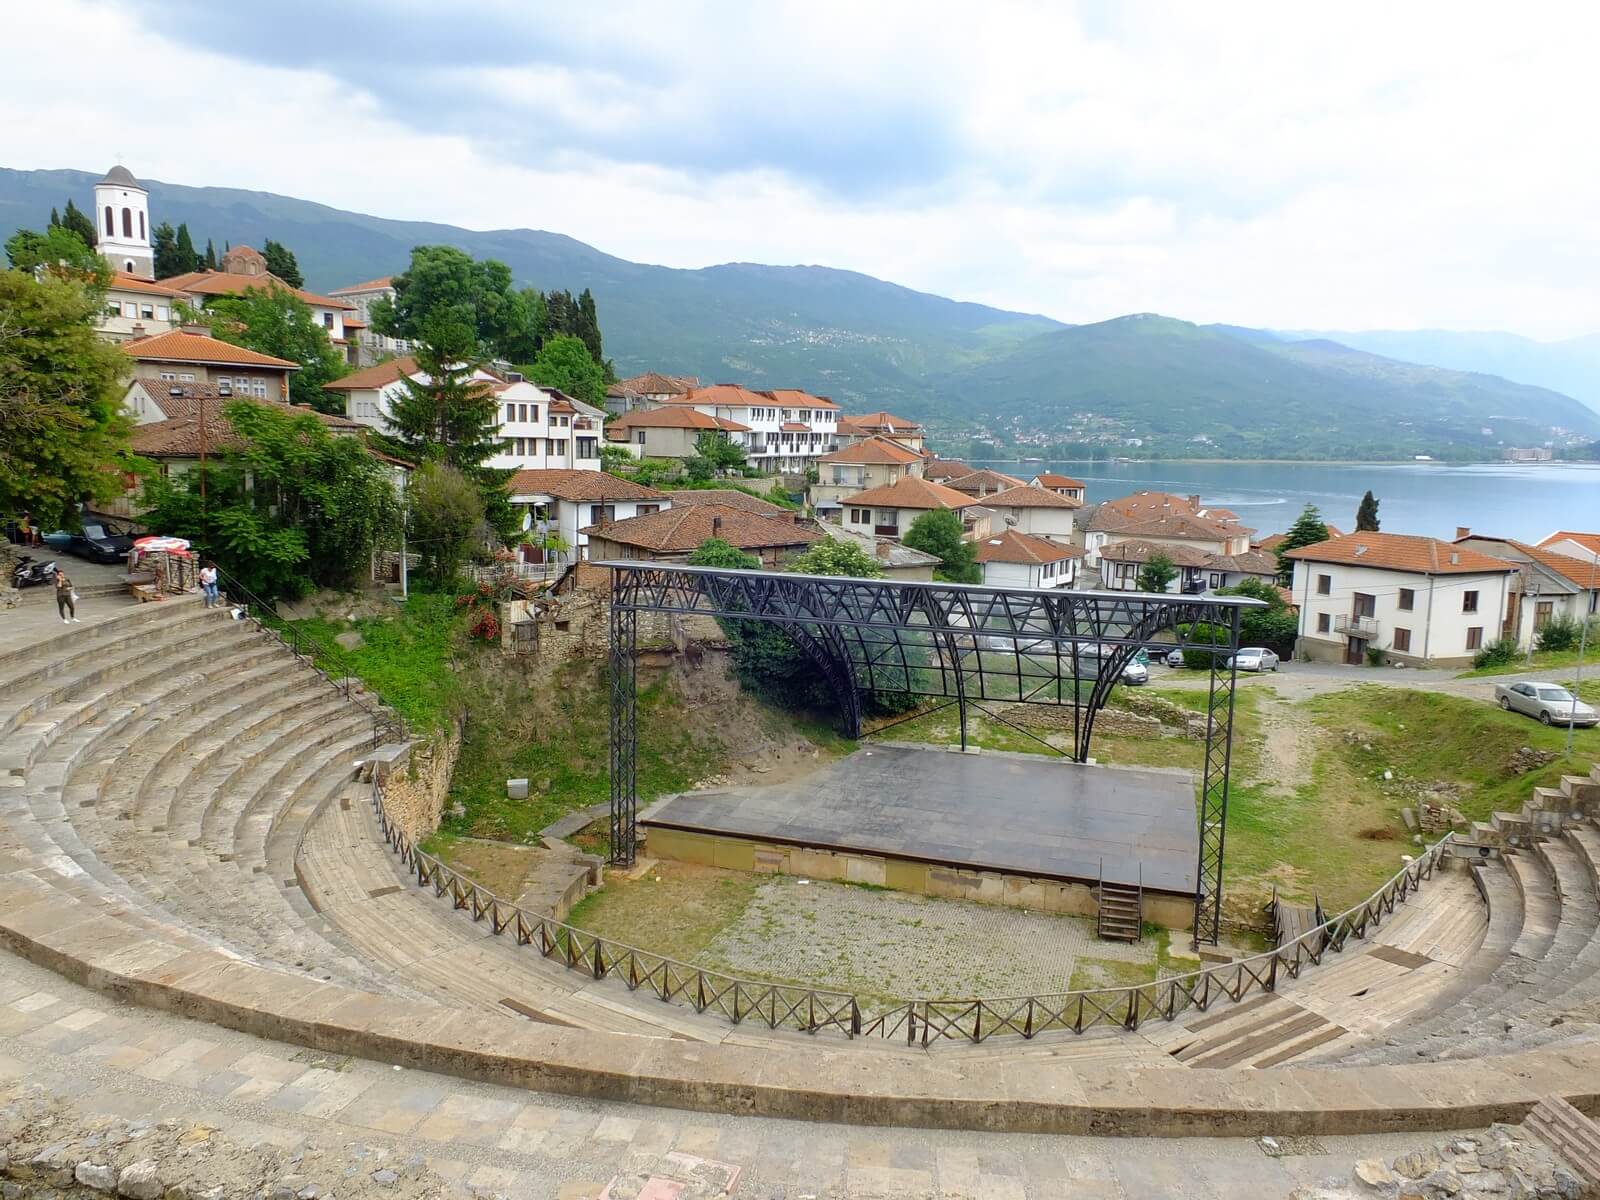 Foto: Antikes rmisches Theater in Ohrid - Lupe Reisen